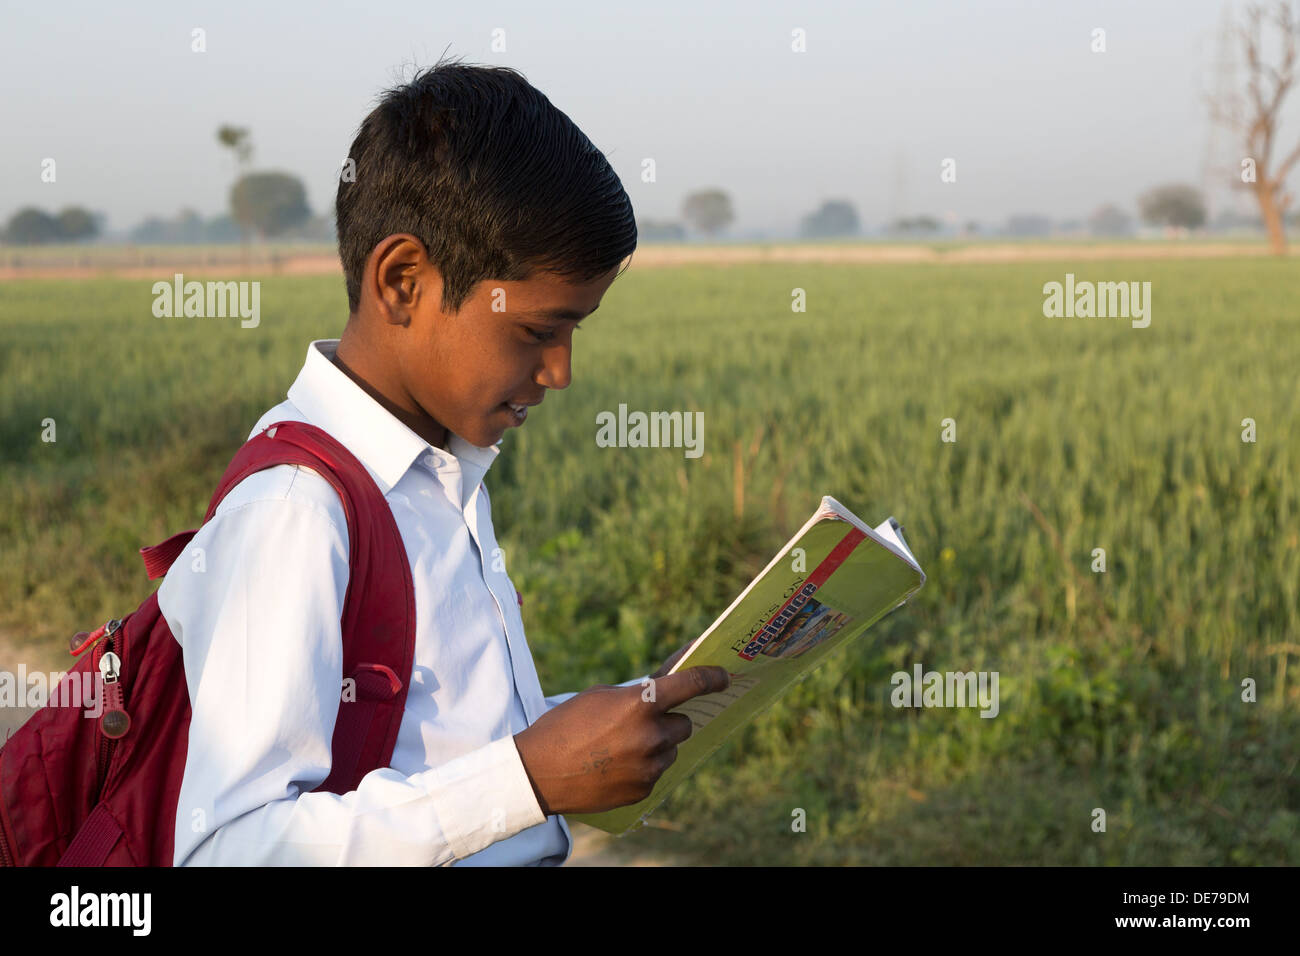 India, Uttar Pradesh, Agra, young boy in school uniform looking at text book Stock Photo